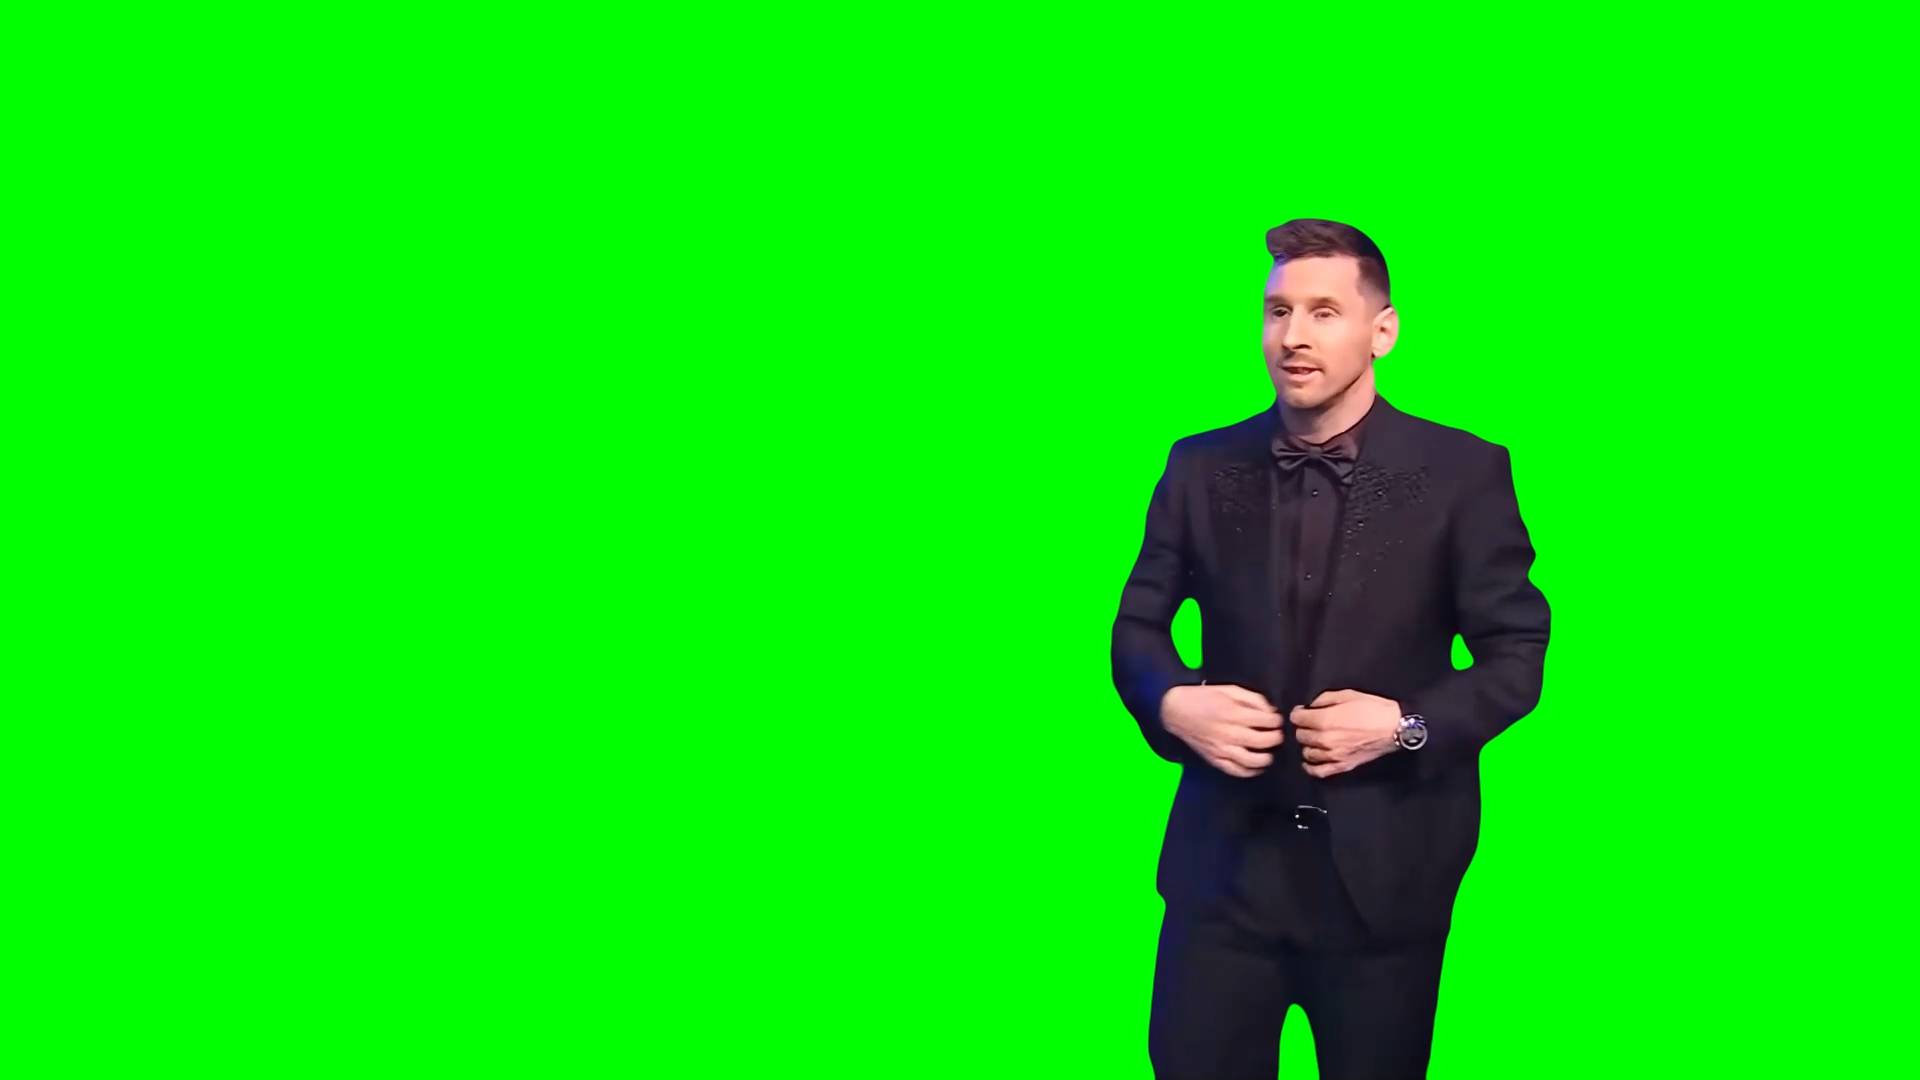 Lionel Messi Walking and Winning Award meme (Green Screen)